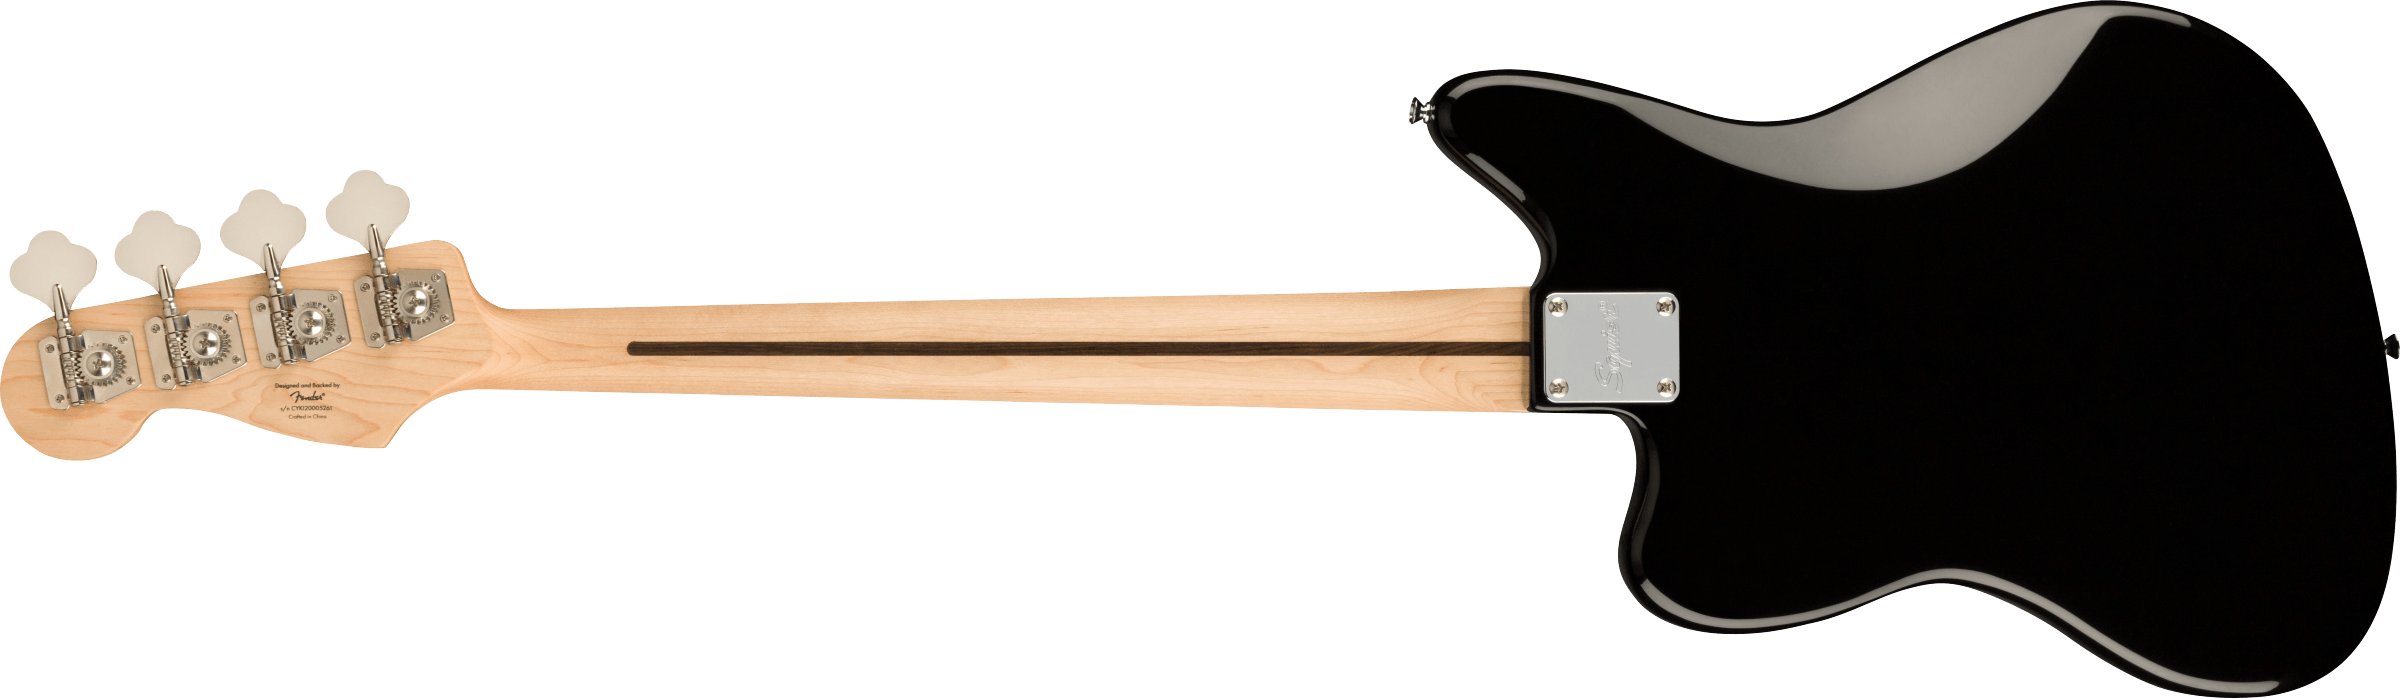 Squier Jaguar Bass Affinity 2021 Mn - Black - Solid body elektrische bas - Variation 1